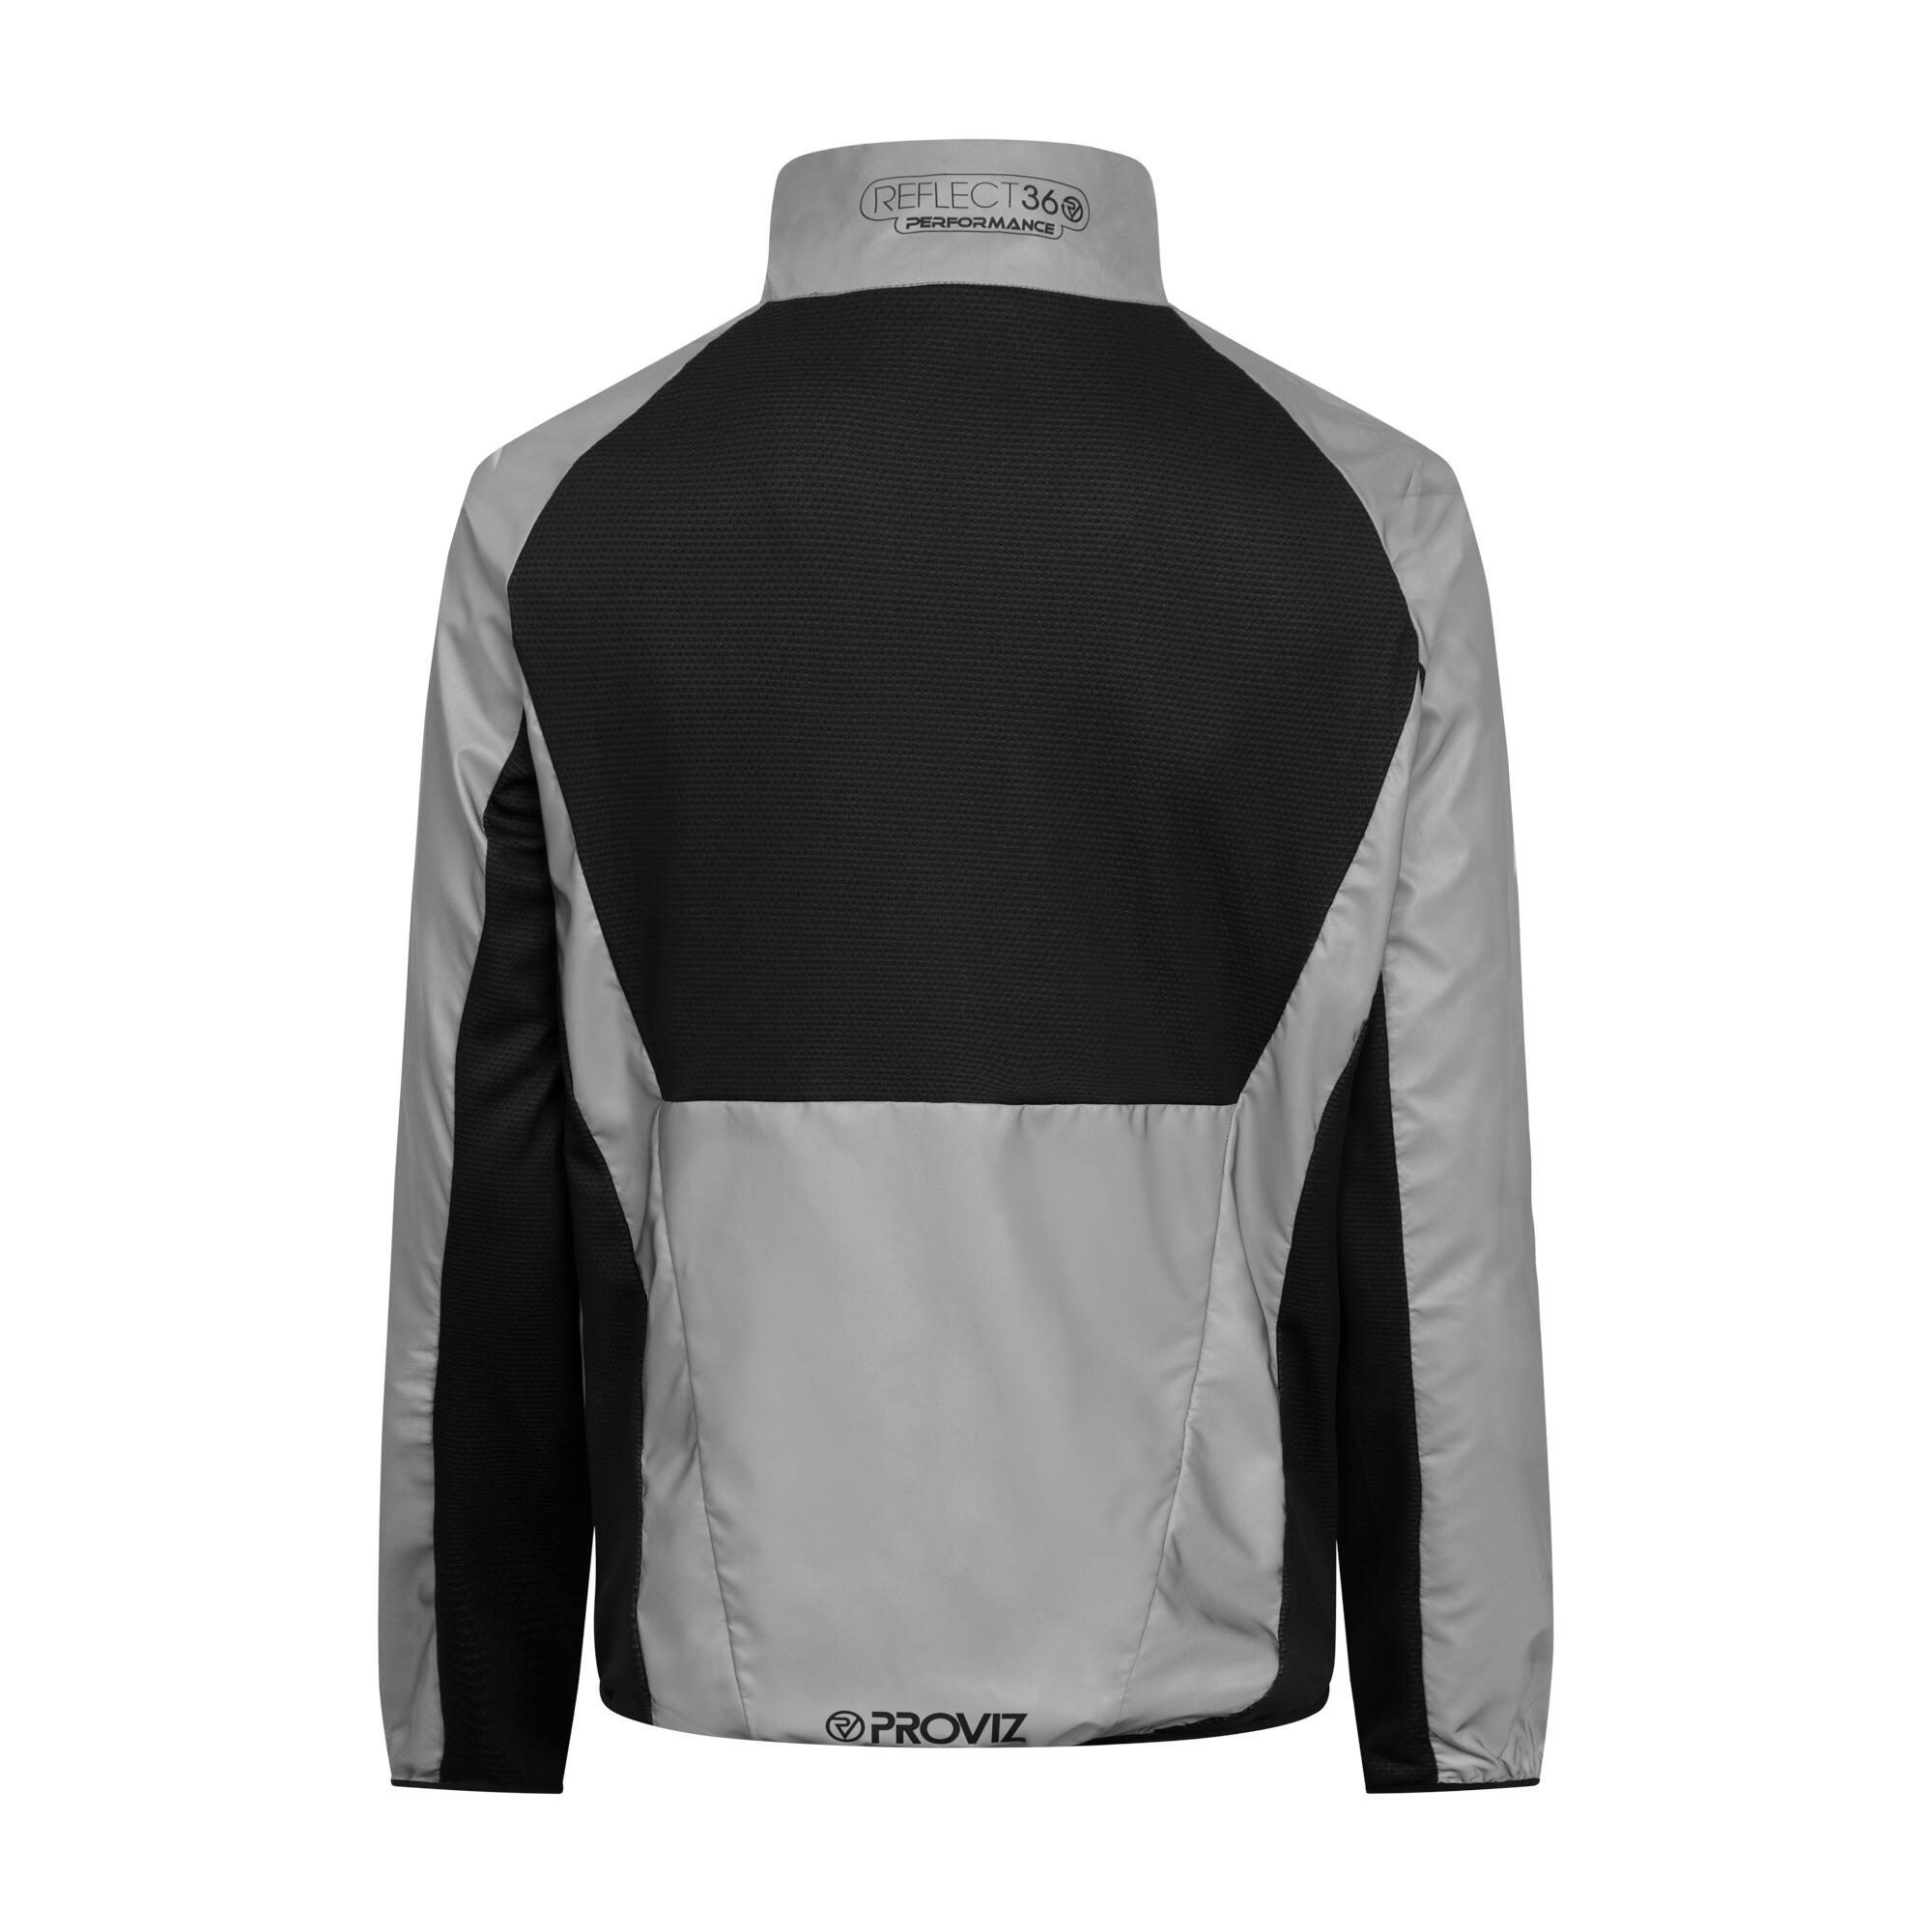 Proviz REFLECT360 Men's Performance Reflective Windproof Cycling Jacket 7/7